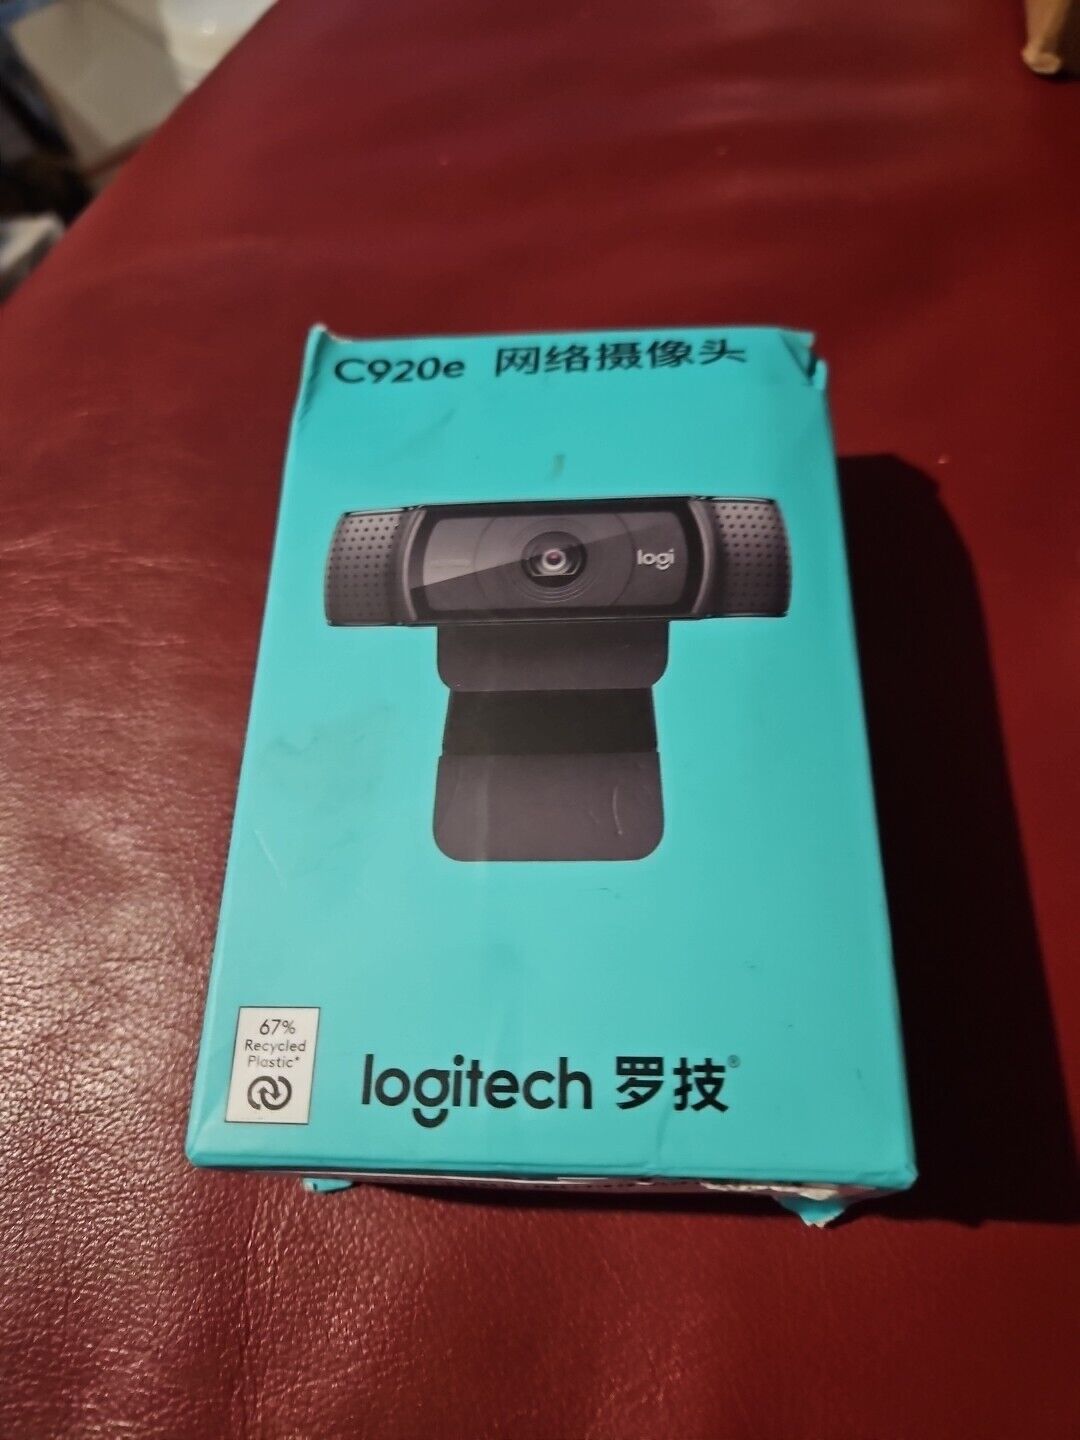 Logitech C920e Business Webcam - Full HD 1080p